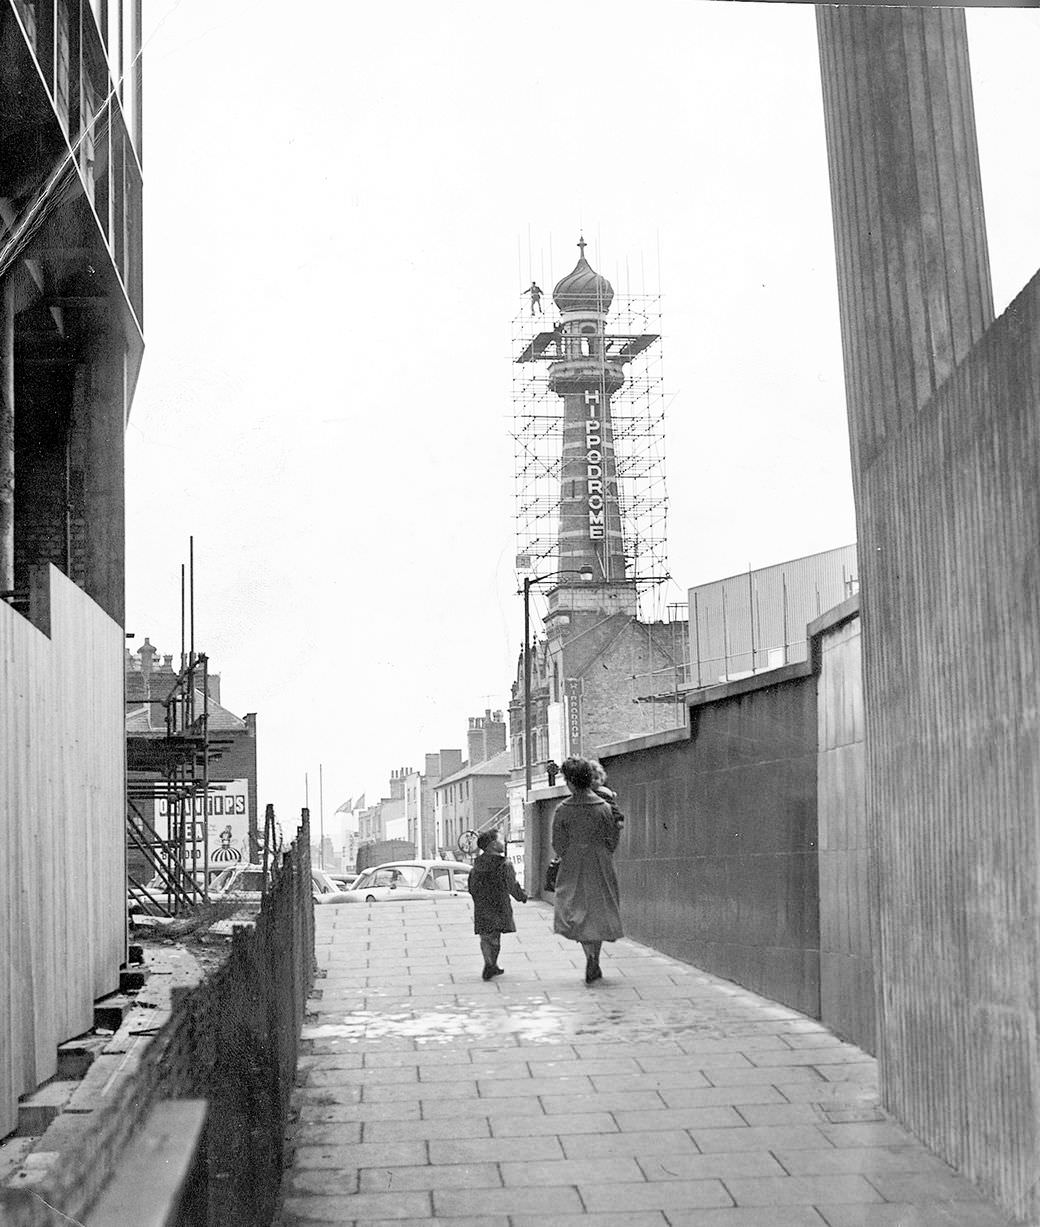 The Birmingham Hippodrome Tower in Scaffold, 1960.